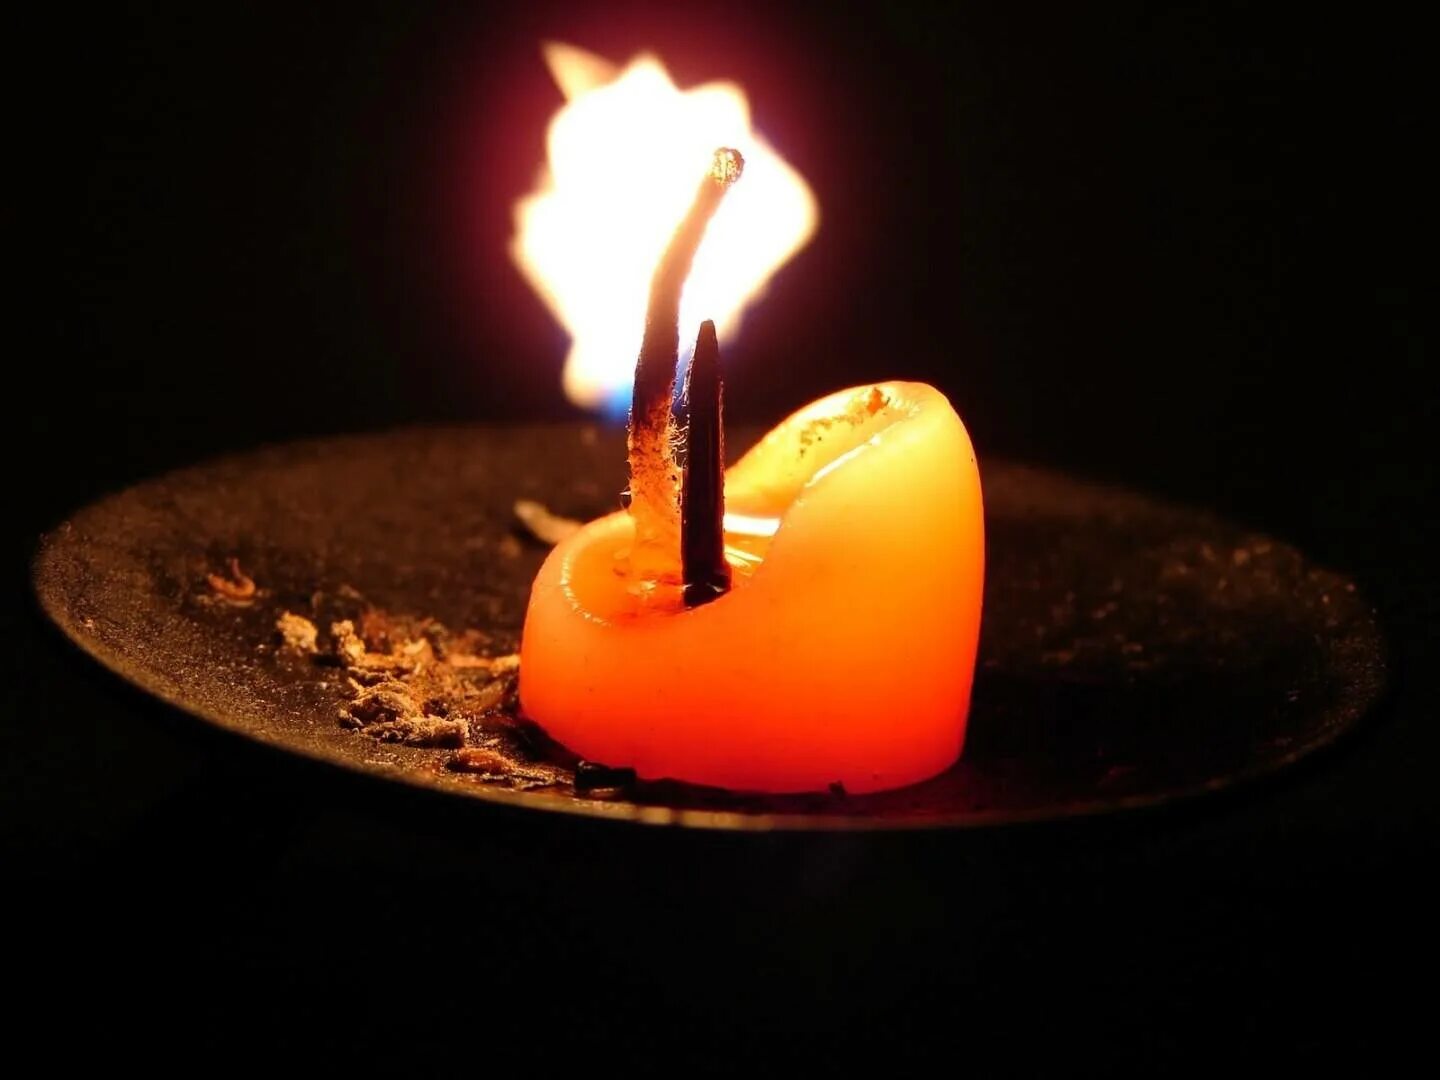 Свечка картинка. Огарок свечи. Обгоревшая свеча. Свеча горела. Свечной огарок.